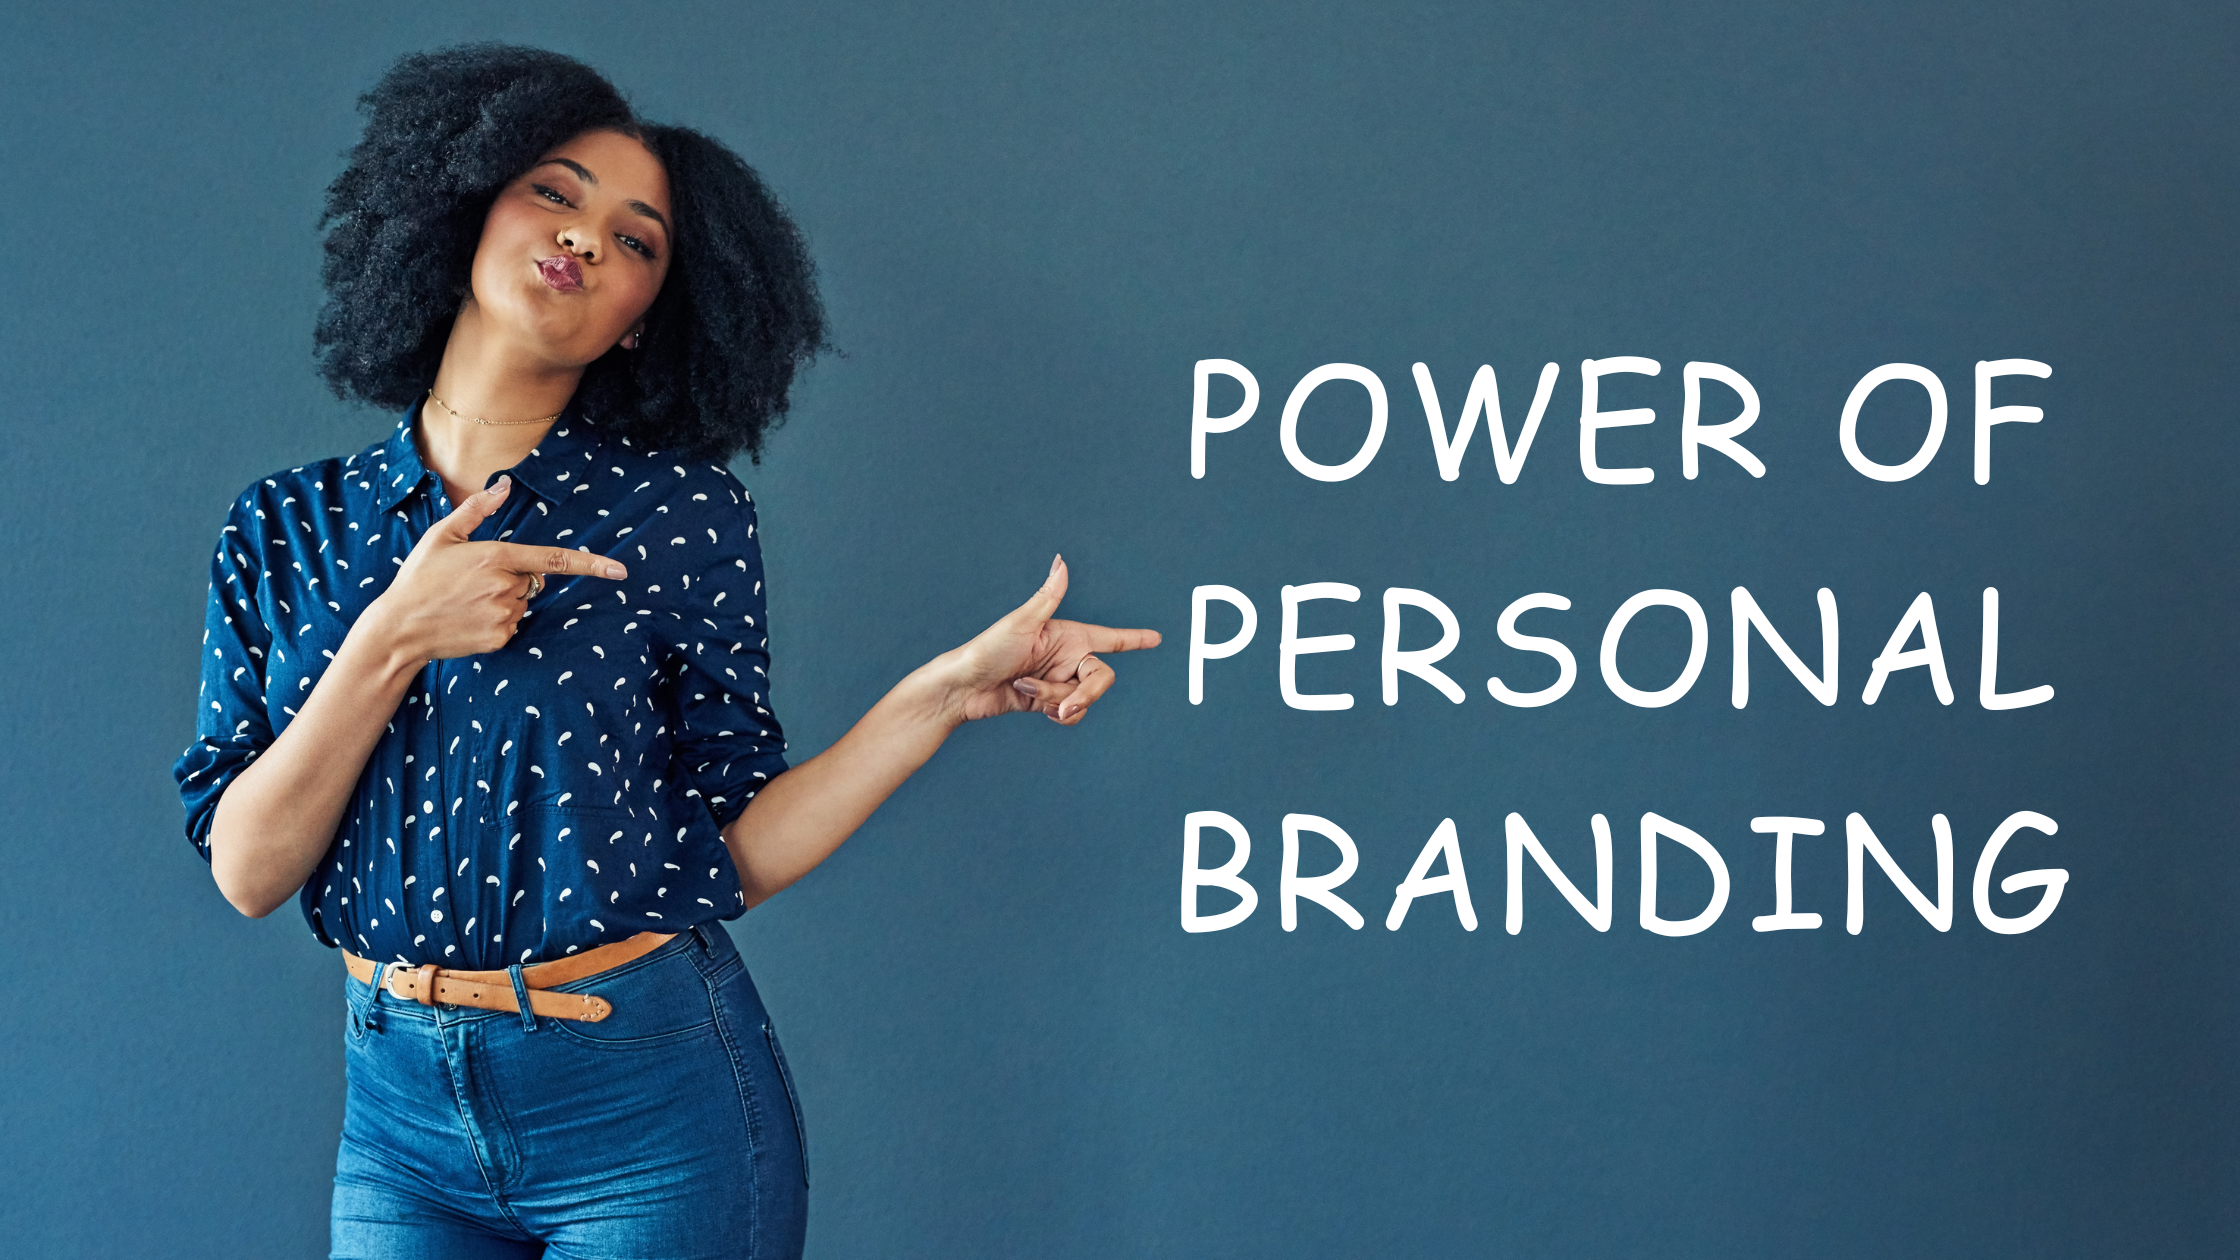 Power of personal branding